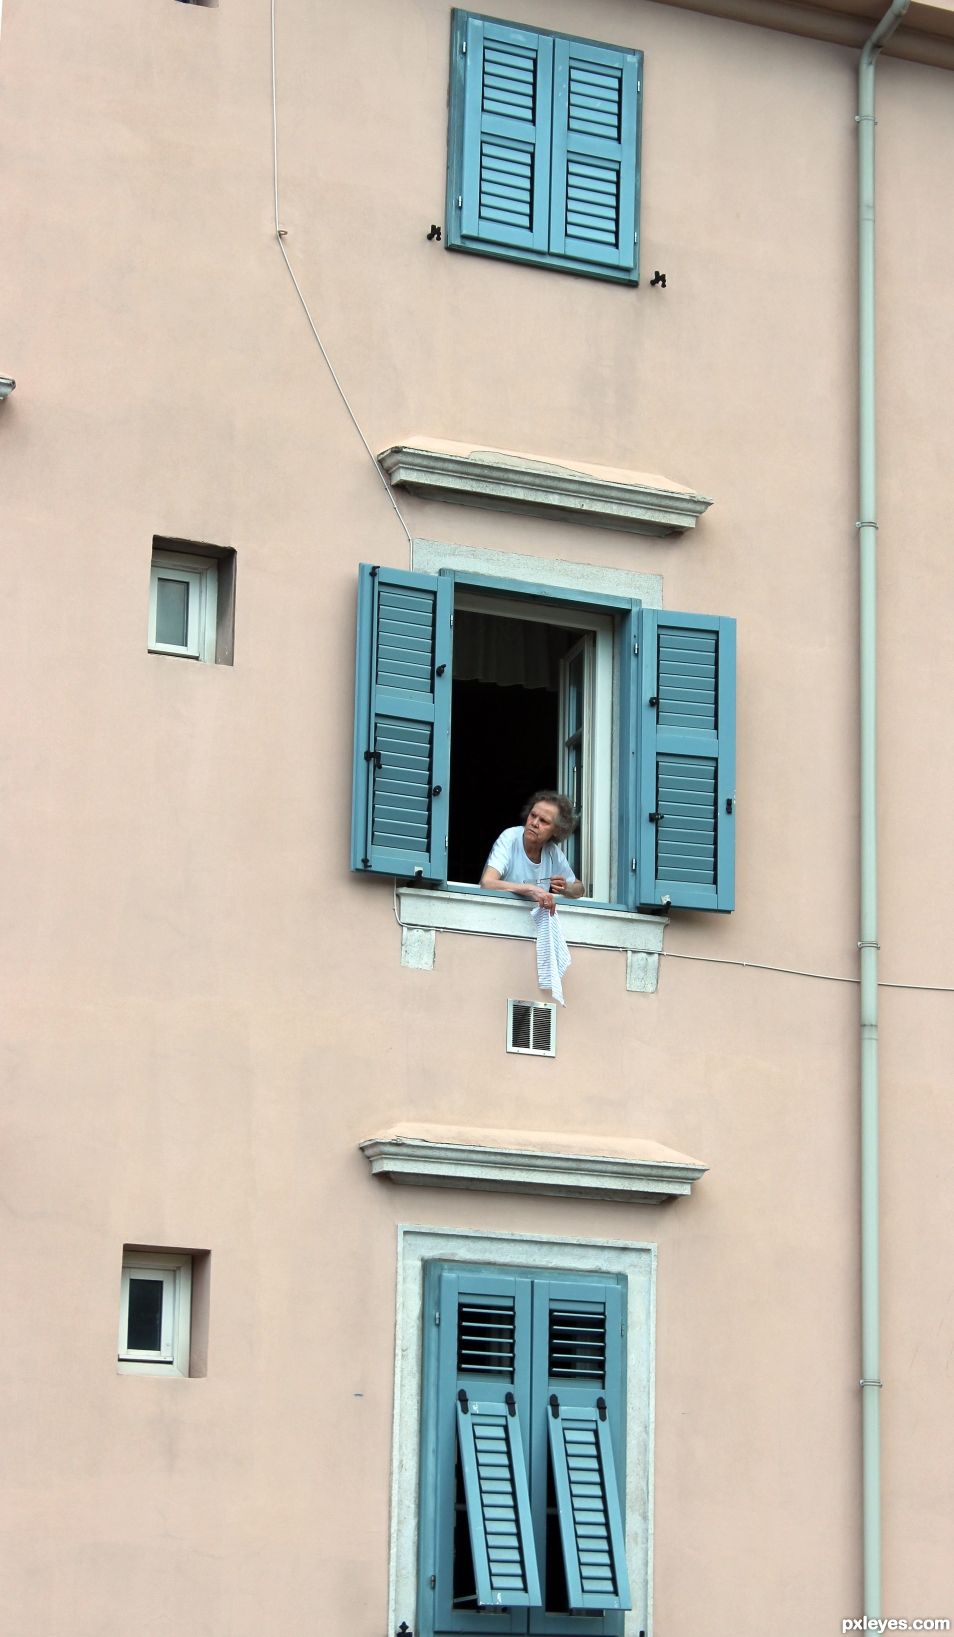 Entry number 106752 Woman in window, Trieste